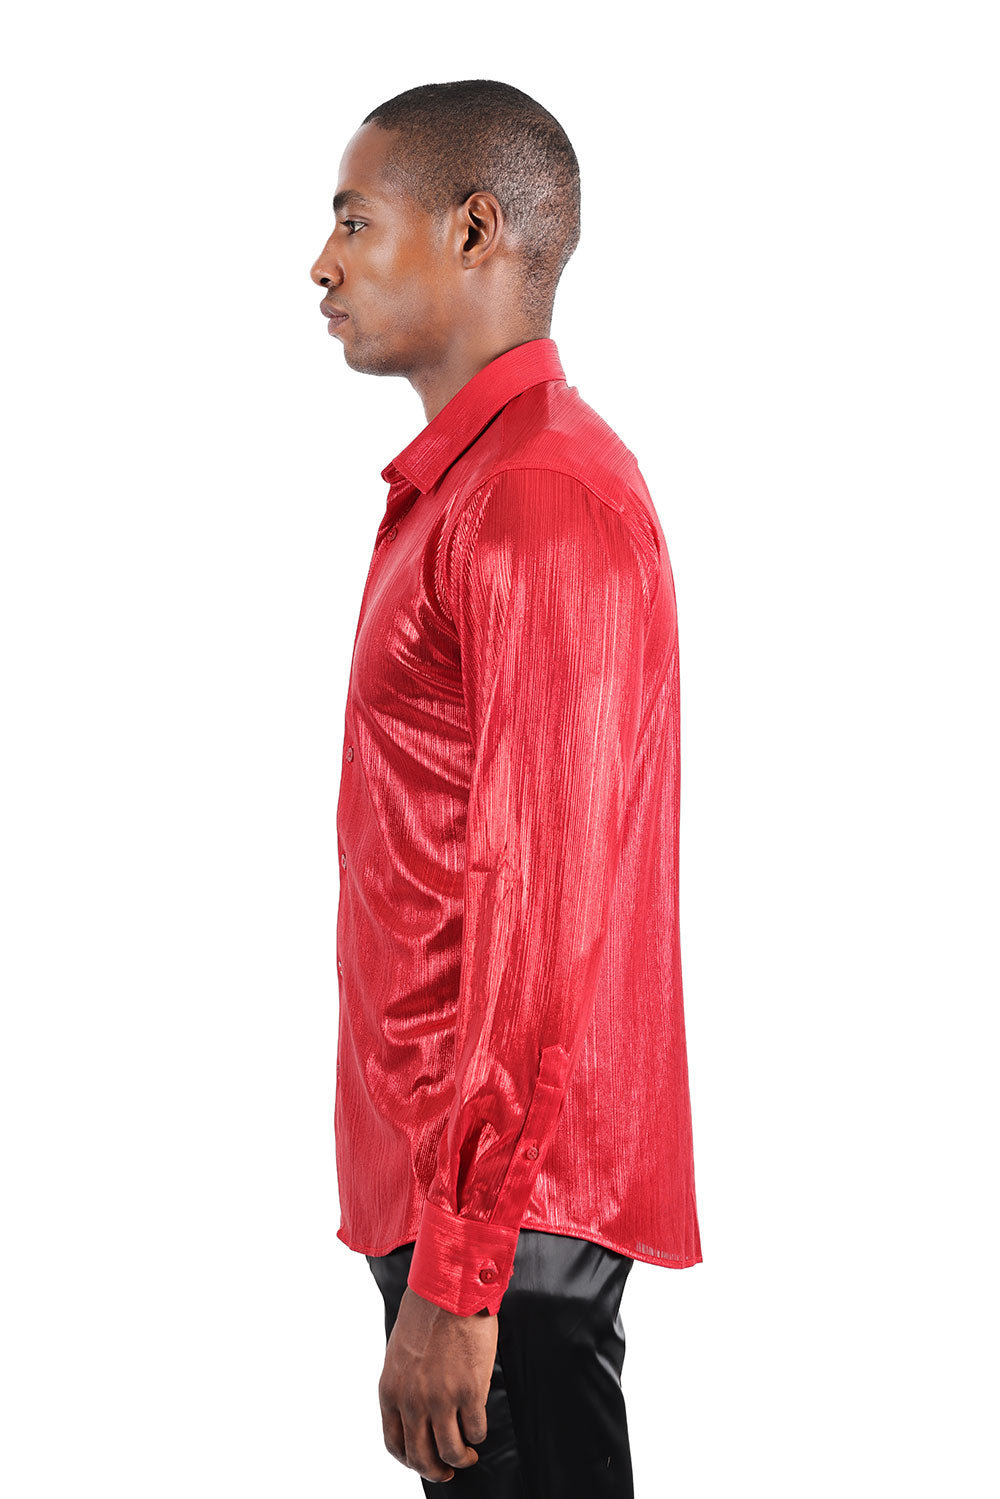 BARABAS Men's Premium Shinny Solid Color Button Down Dress Shirts B46 Red